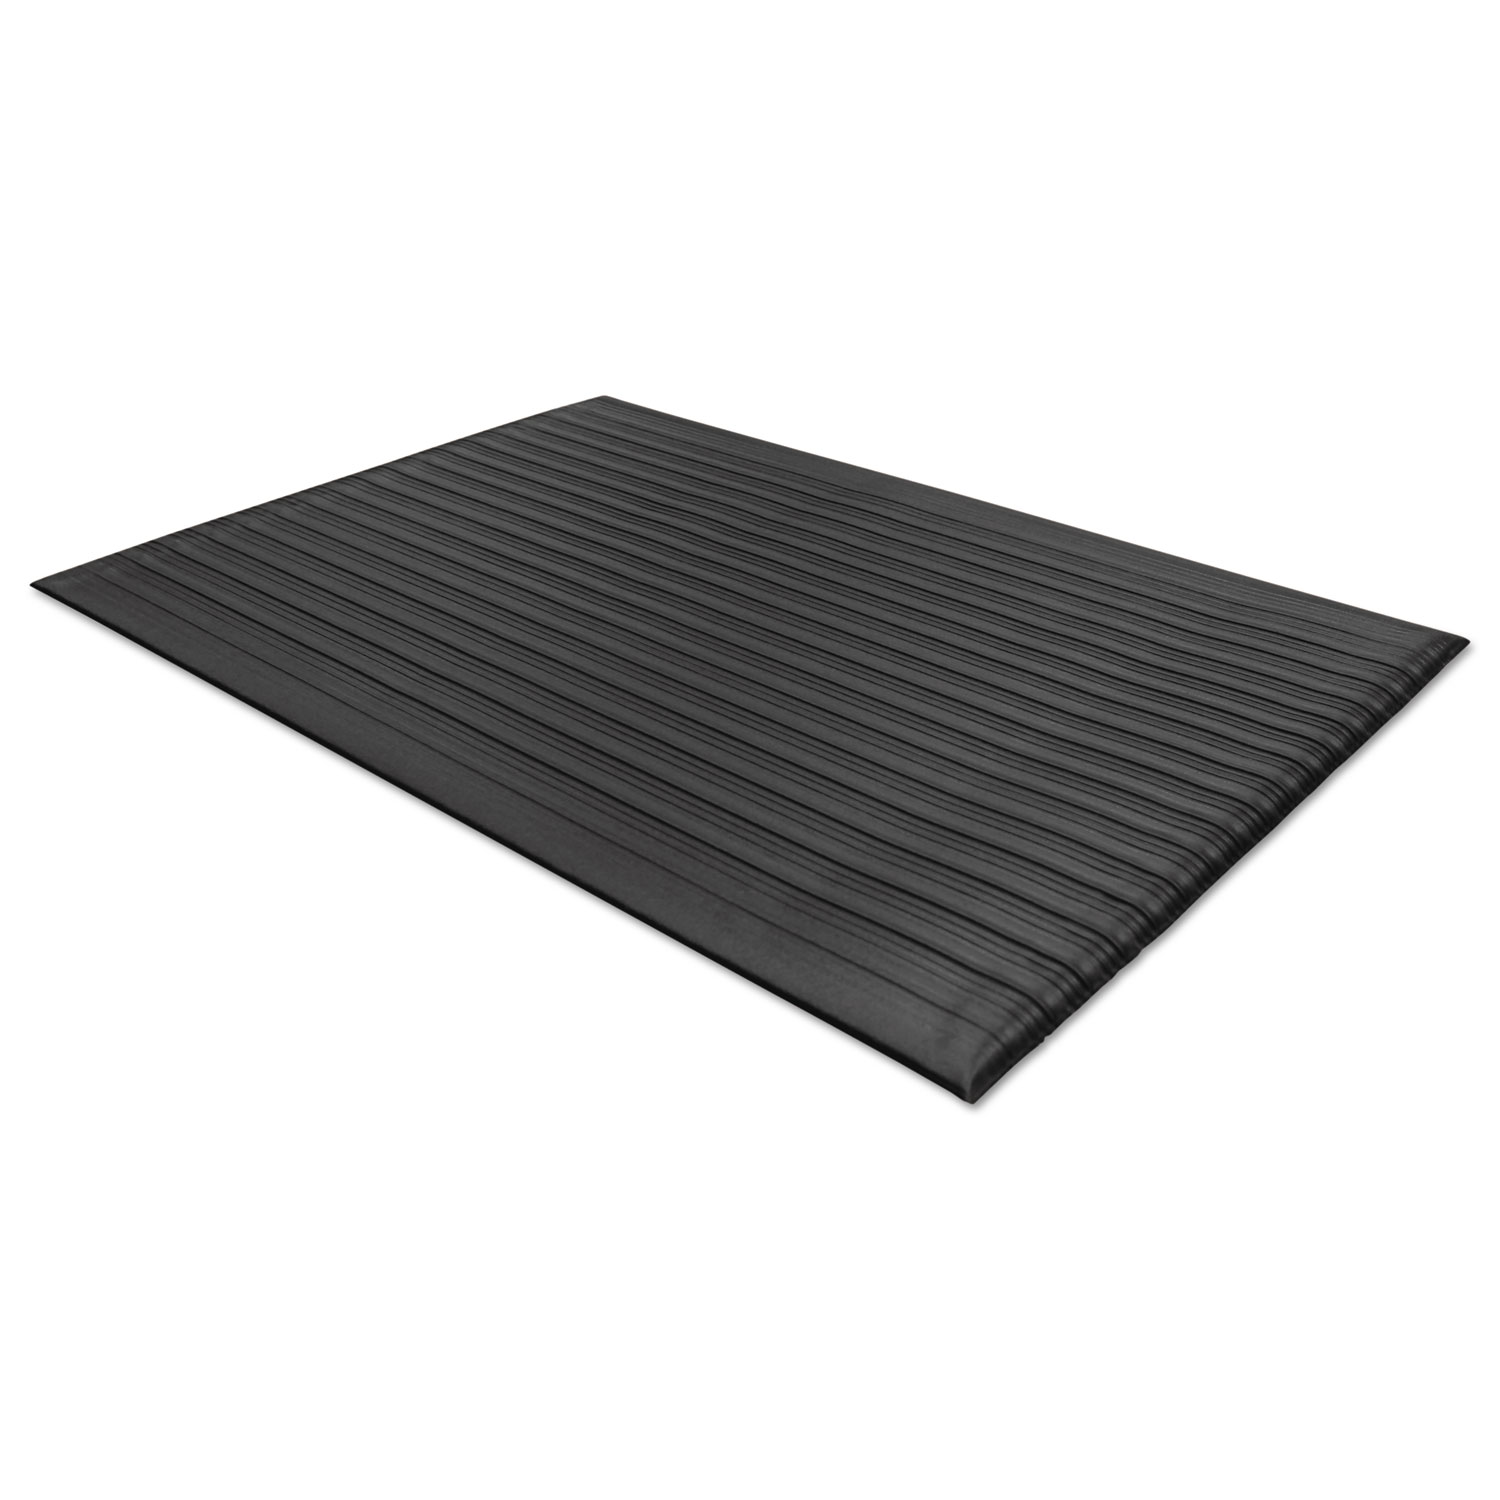  Guardian 24020302 Air Step Antifatigue Mat, Polypropylene, 24 x 36, Black (MLL24020302) 